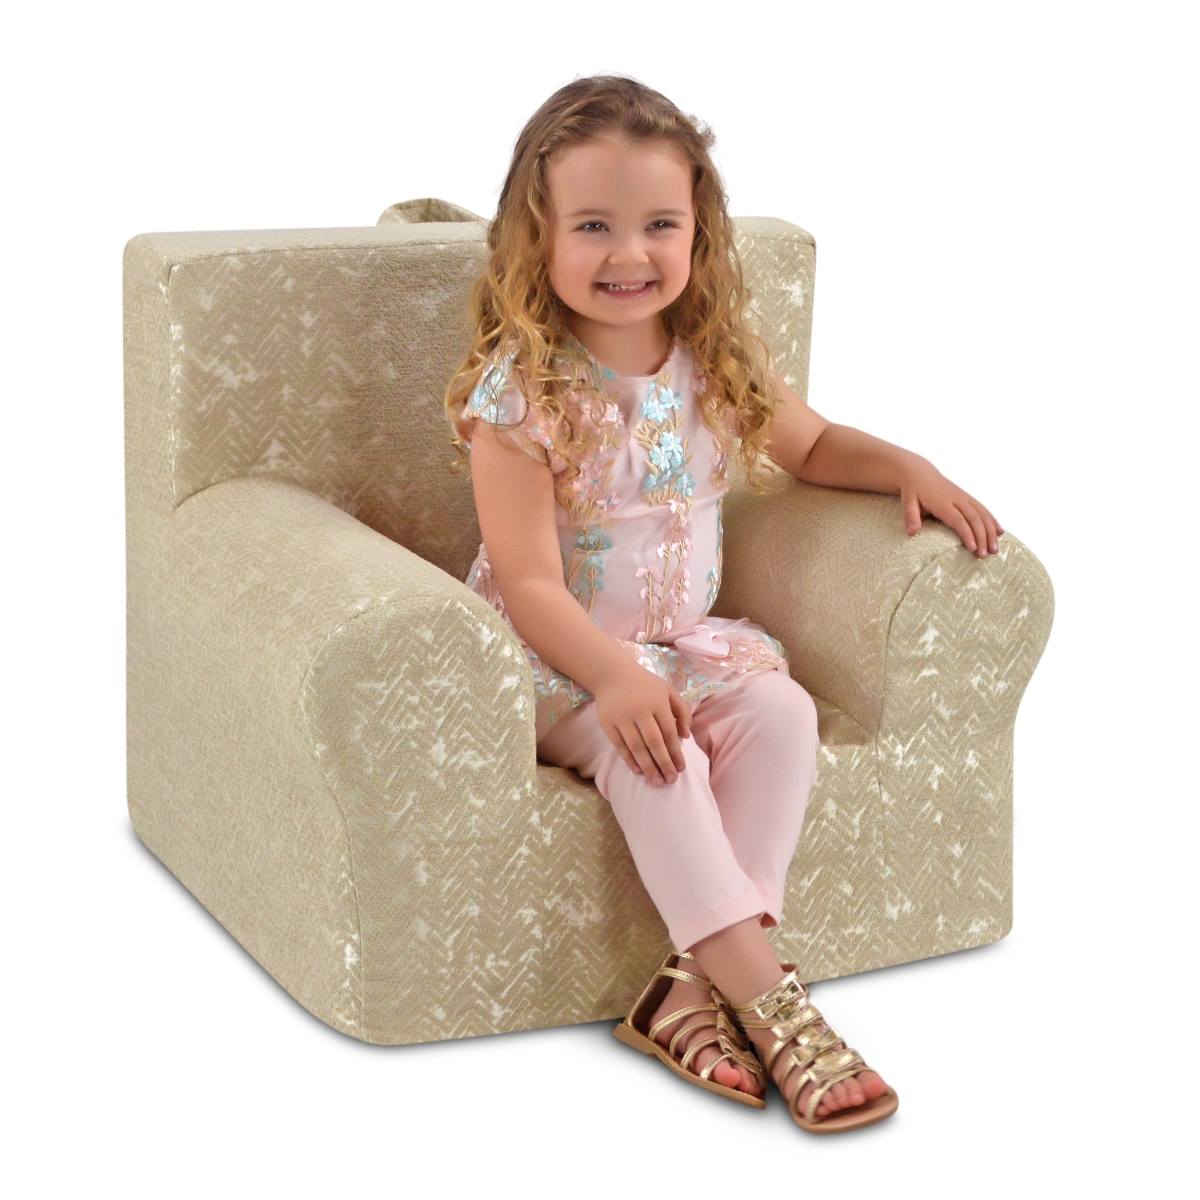 Kangaroo Trading 4078lwp Weston Kids Grab-n-go Foam Chair With Handle - Limerick White Pepper, Ivory